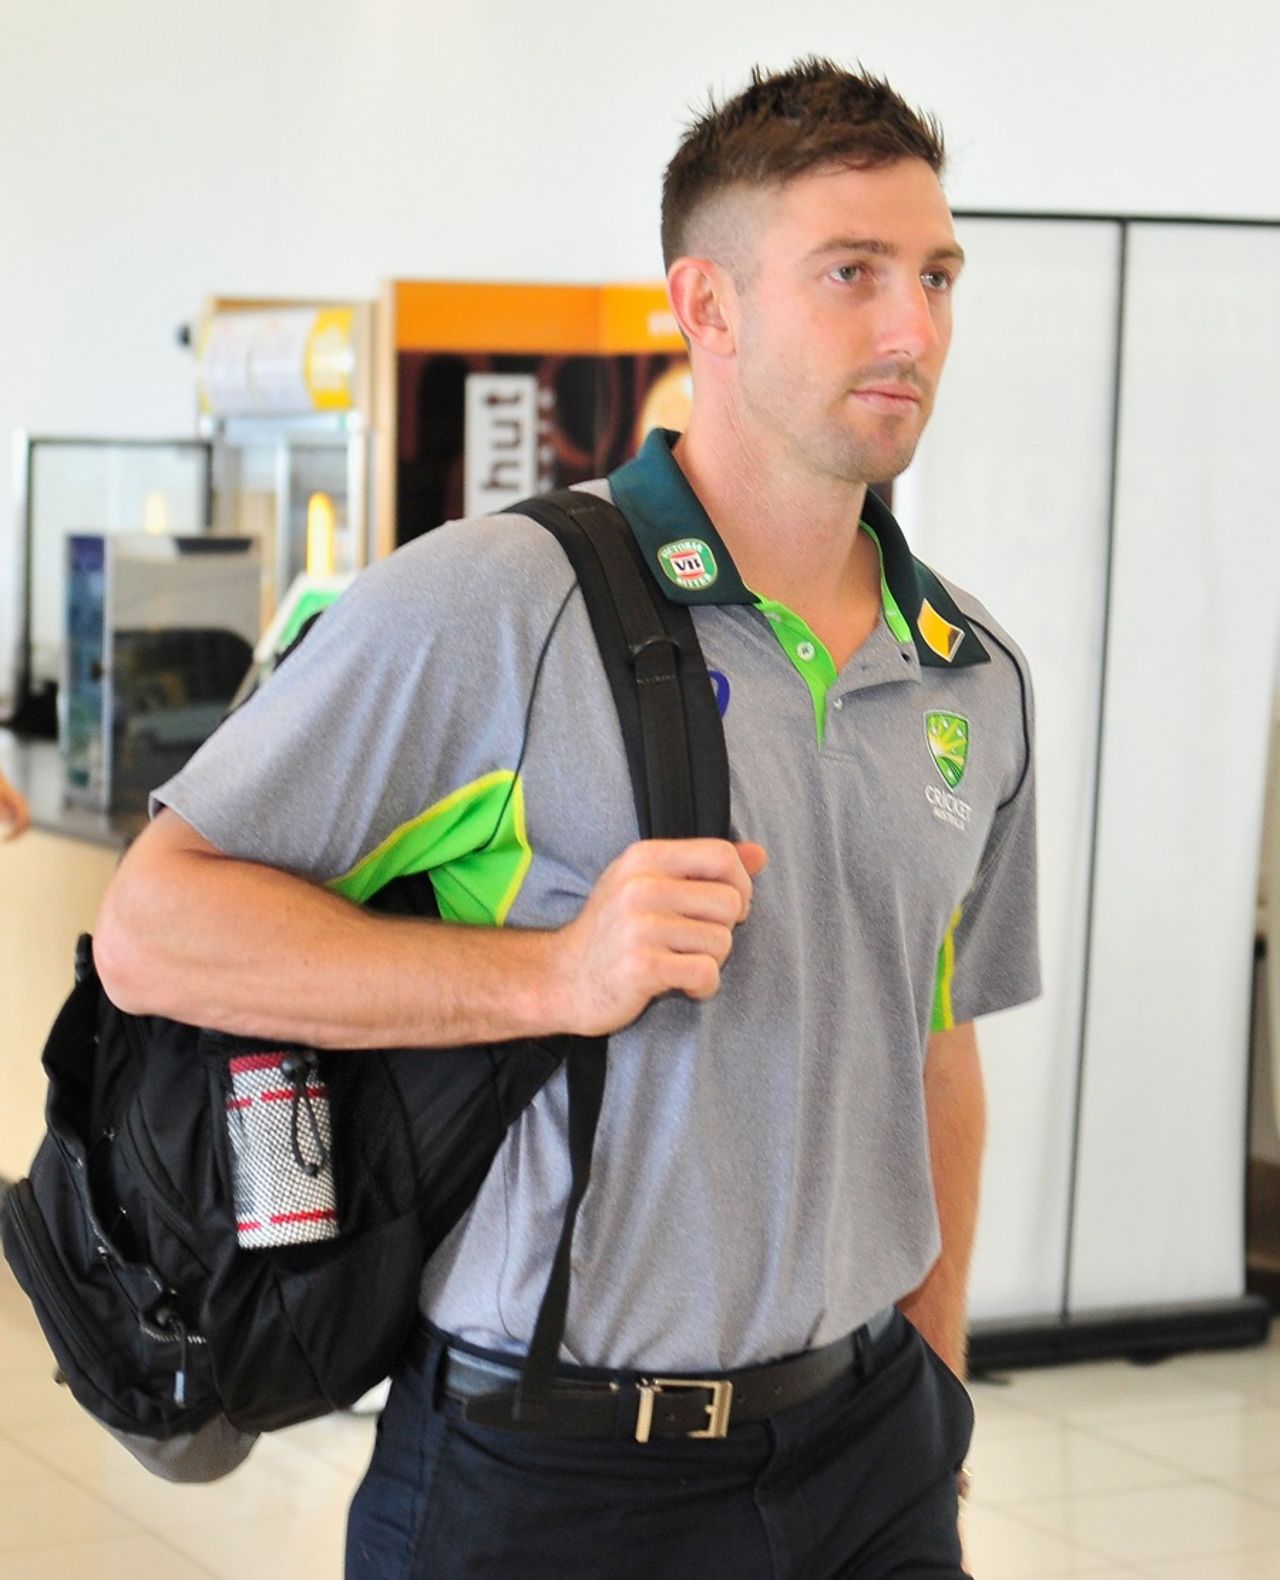 Shaun Marsh was added to the Australia Test squad, Adelaide, December 4, 2014